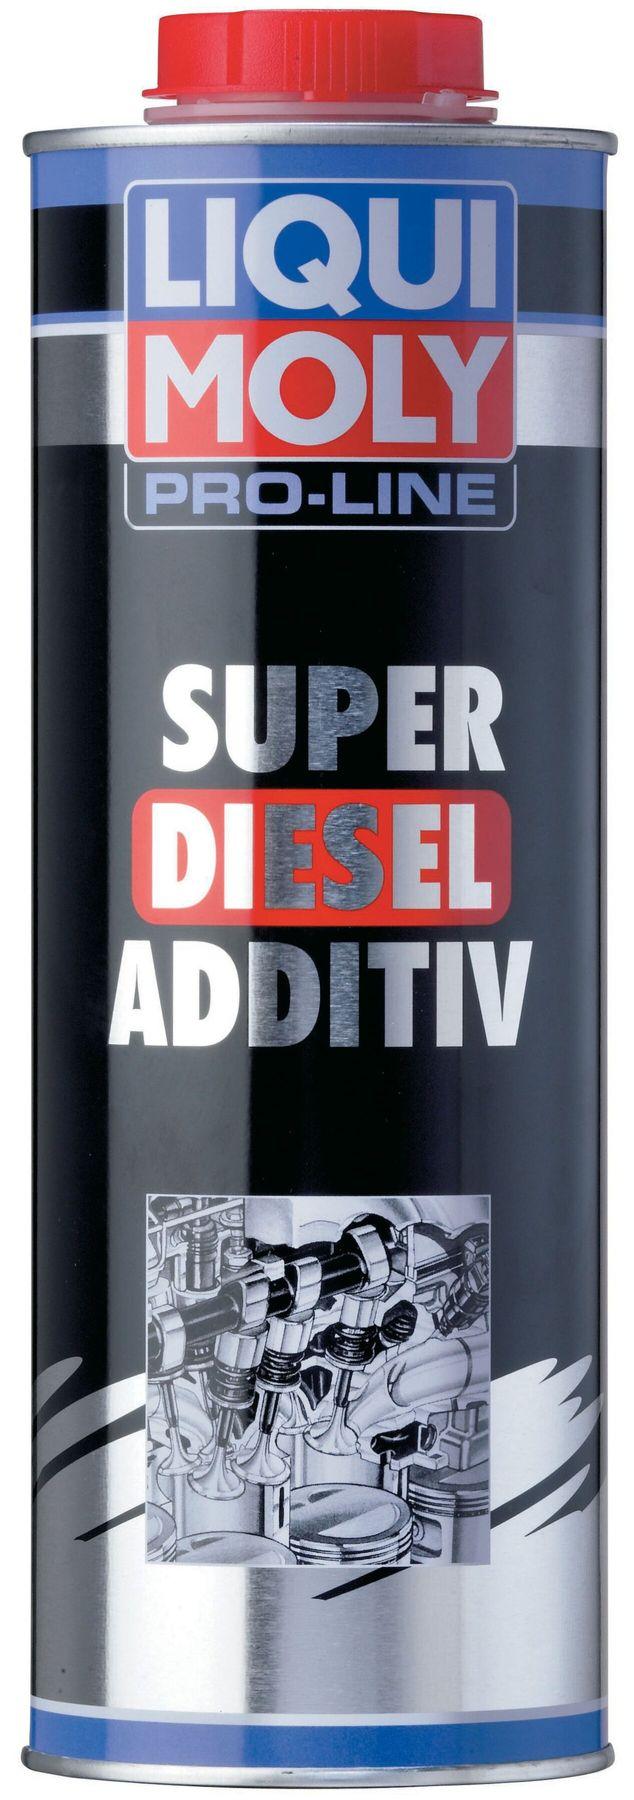 Liqui Moly Pro-Line Super Diesel Additiv, 1 литр (5176)